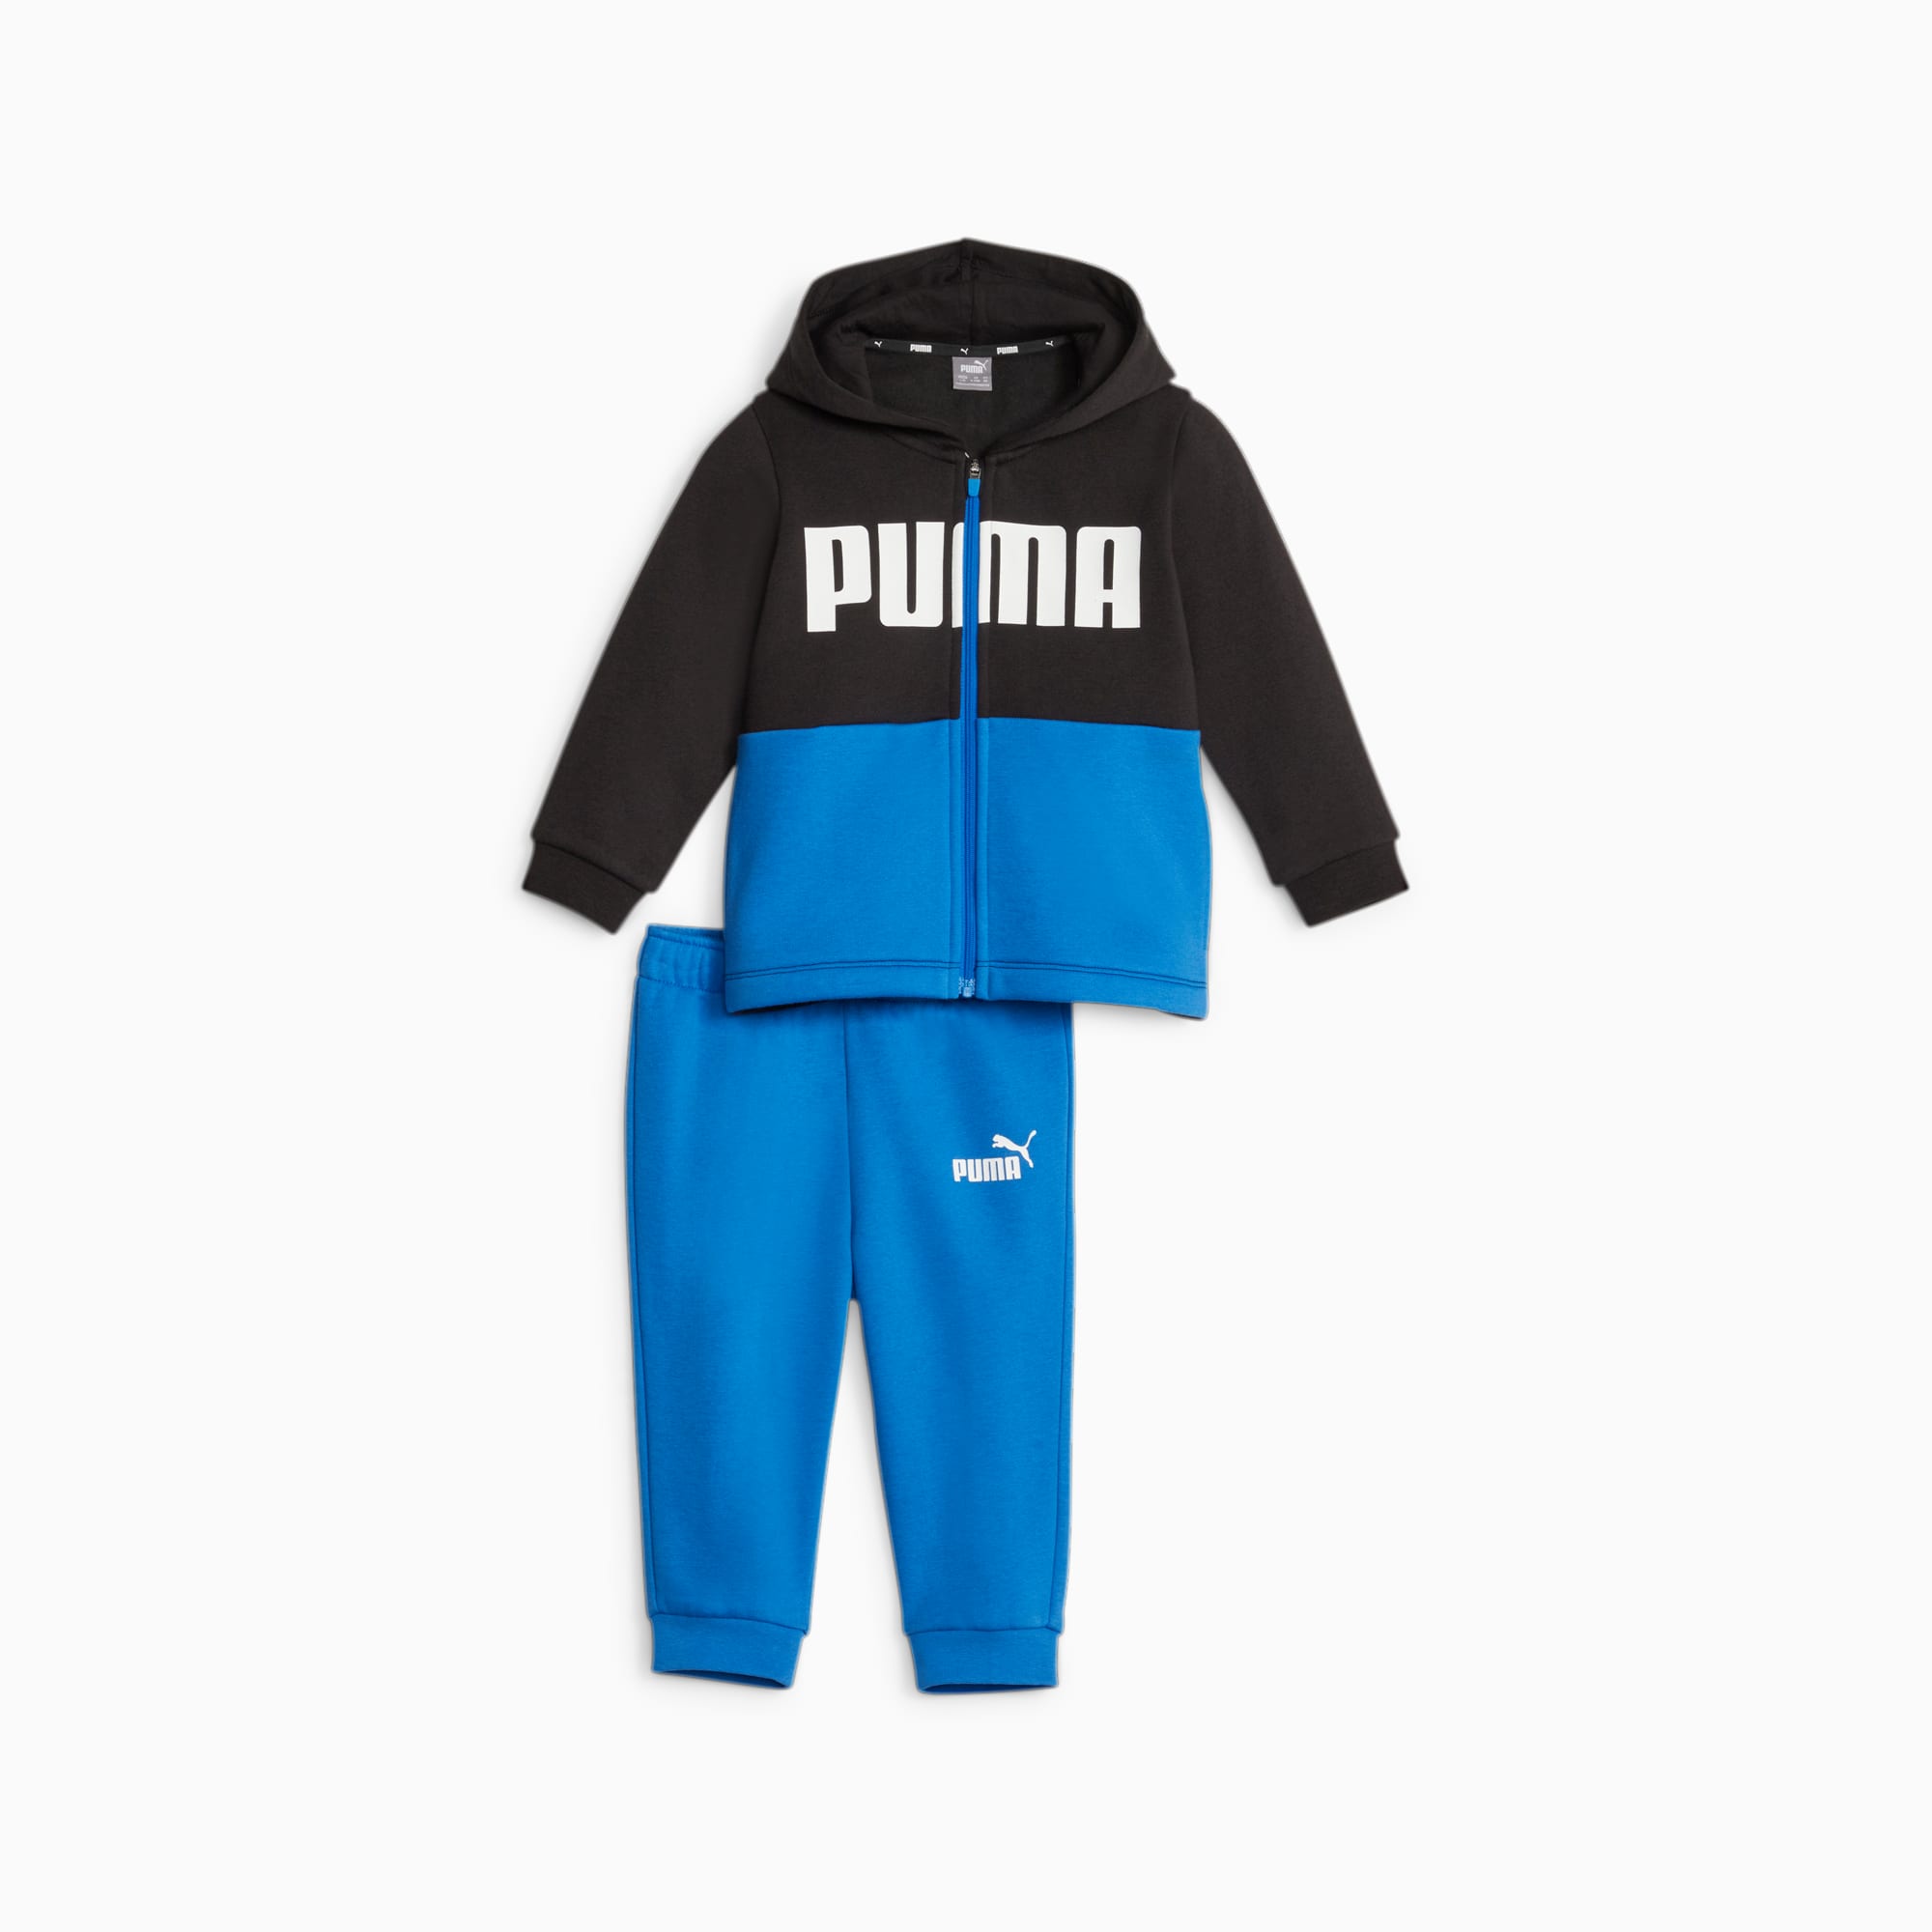 PUMA Minicats Colourblock Jogginganzug Baby Für Kinder, Blau, Größe: 86, Kleidung